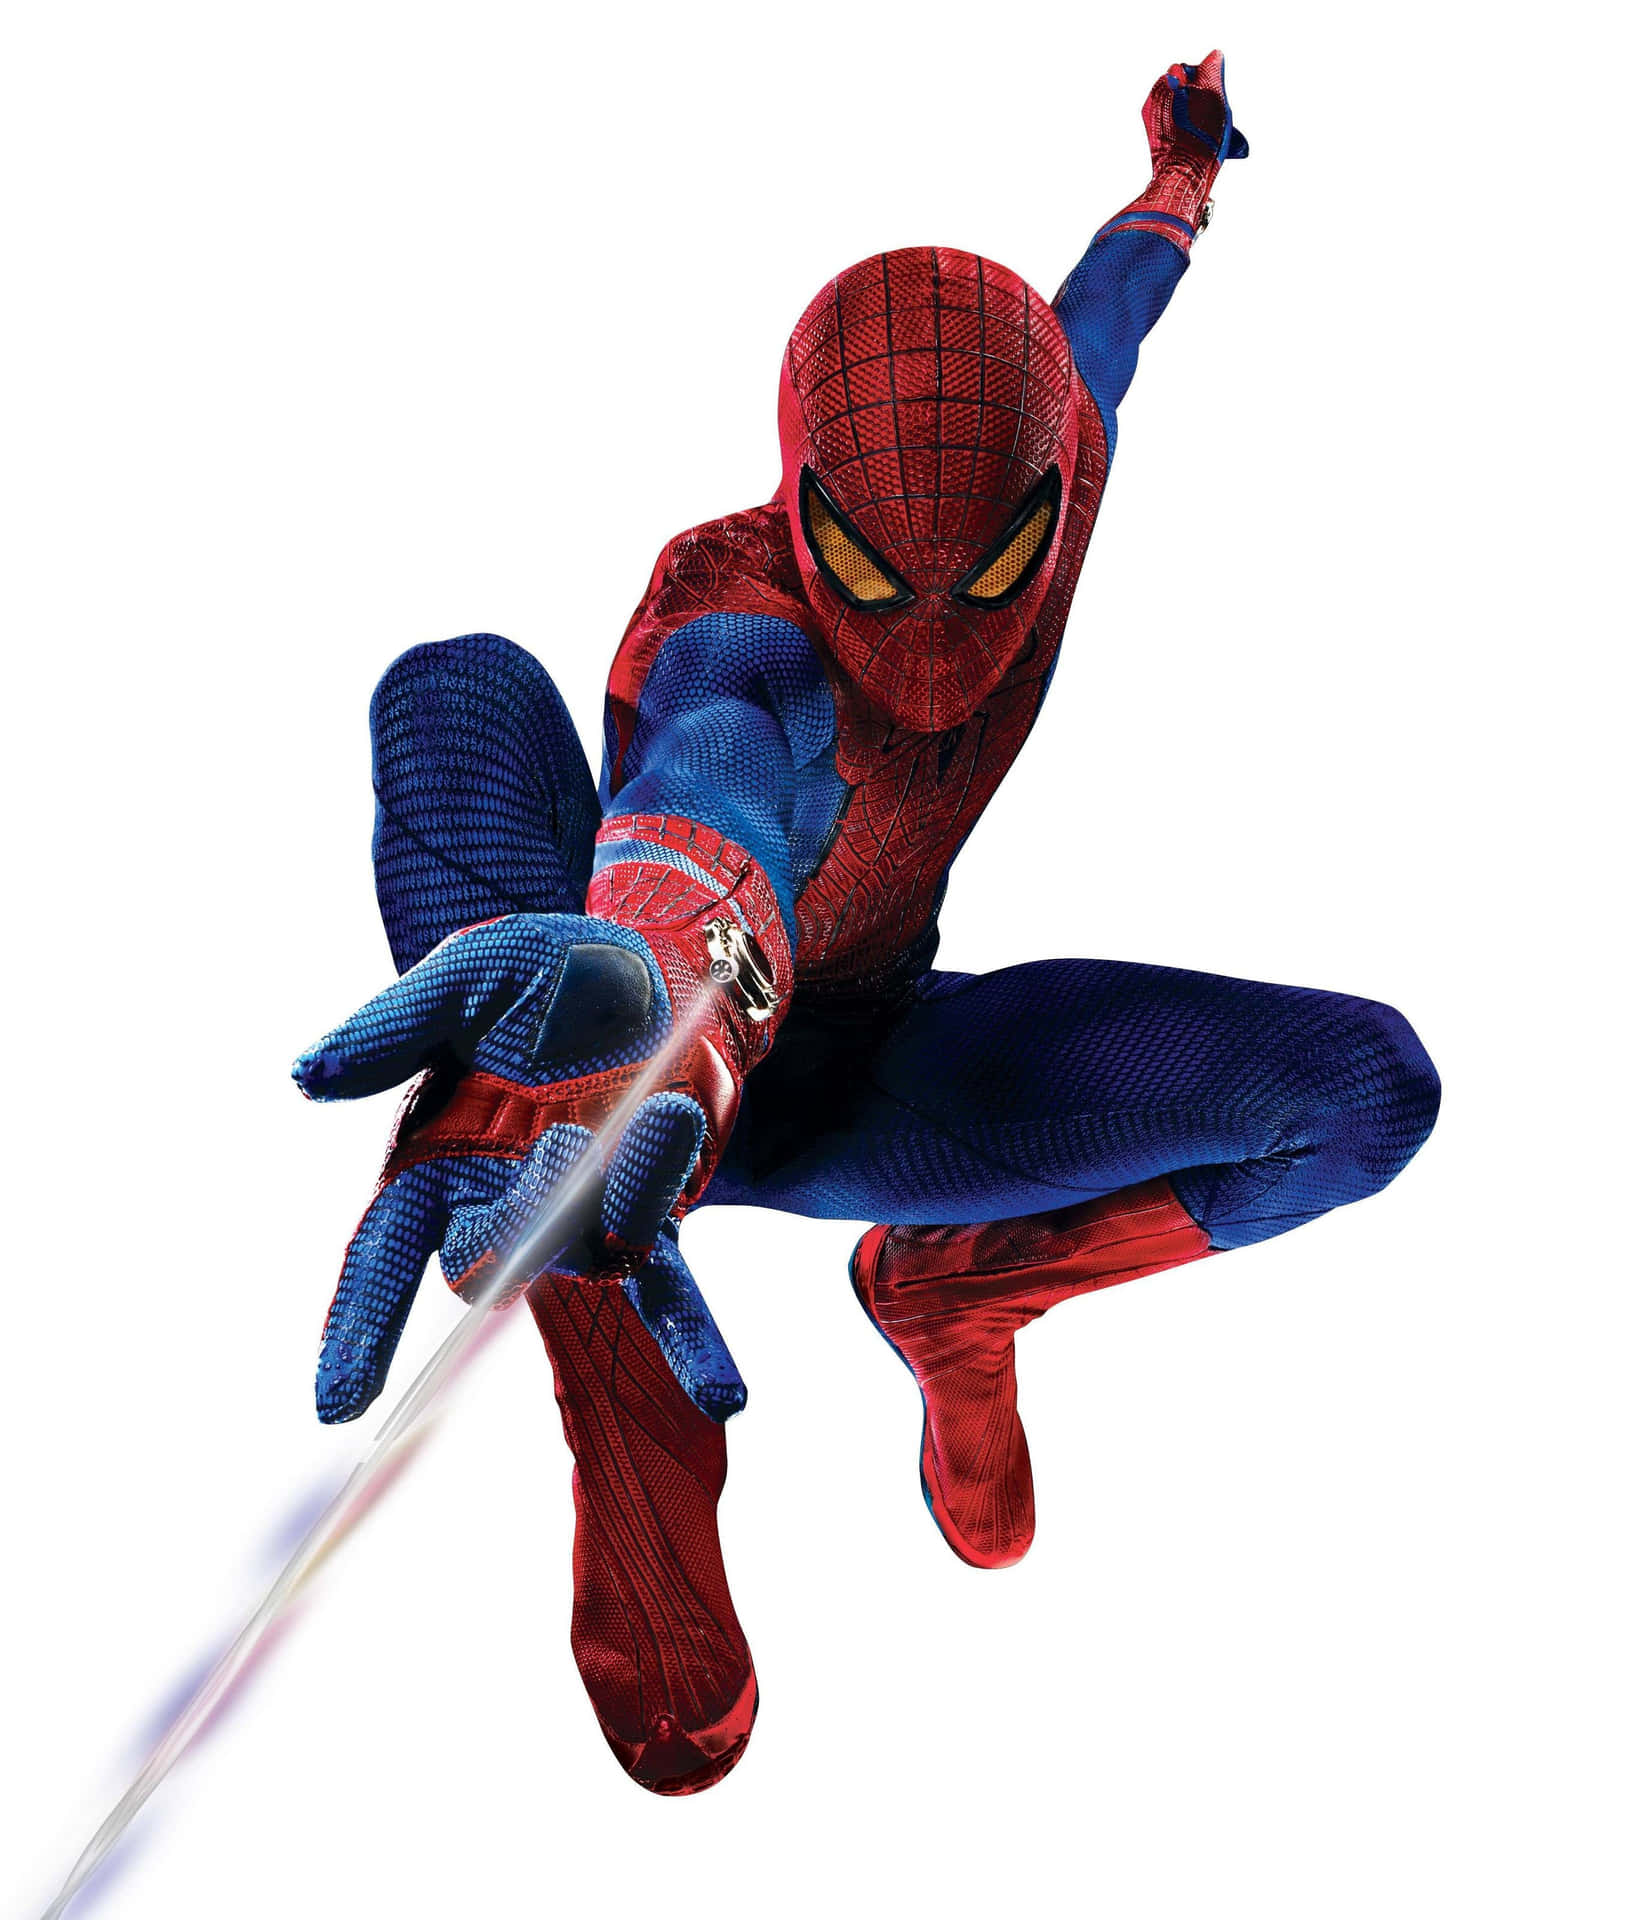 Caption: Web-slinging superhero in action Wallpaper